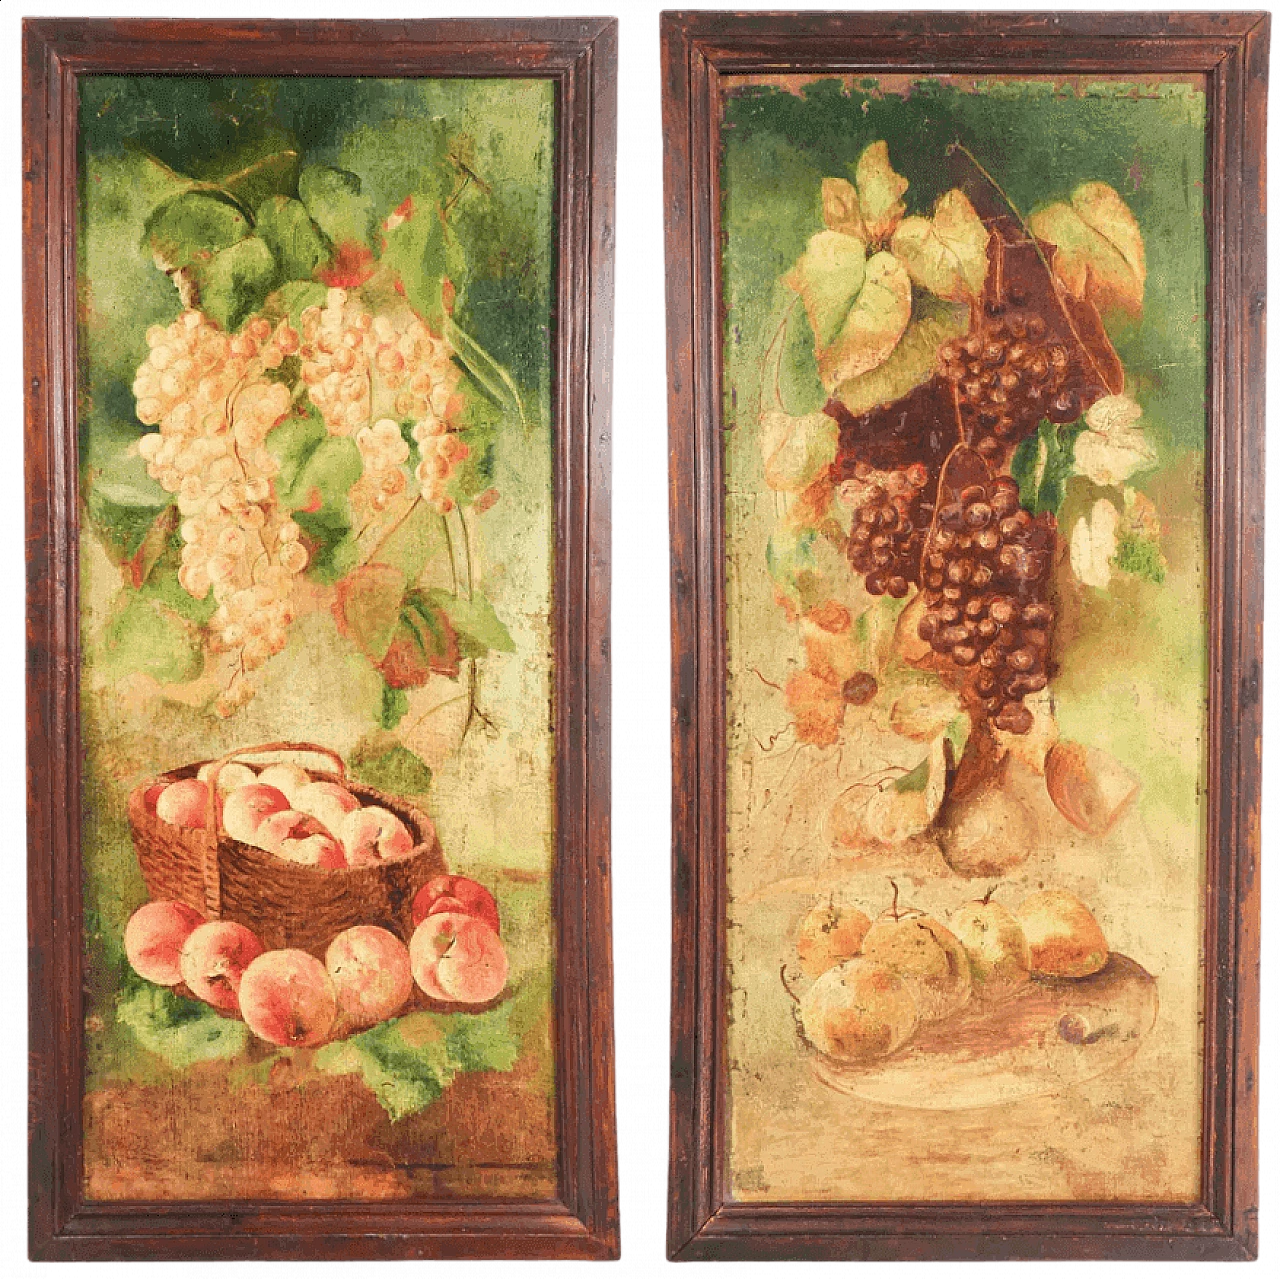 Pair of still lifes, oil on panel, mid-19th century 10